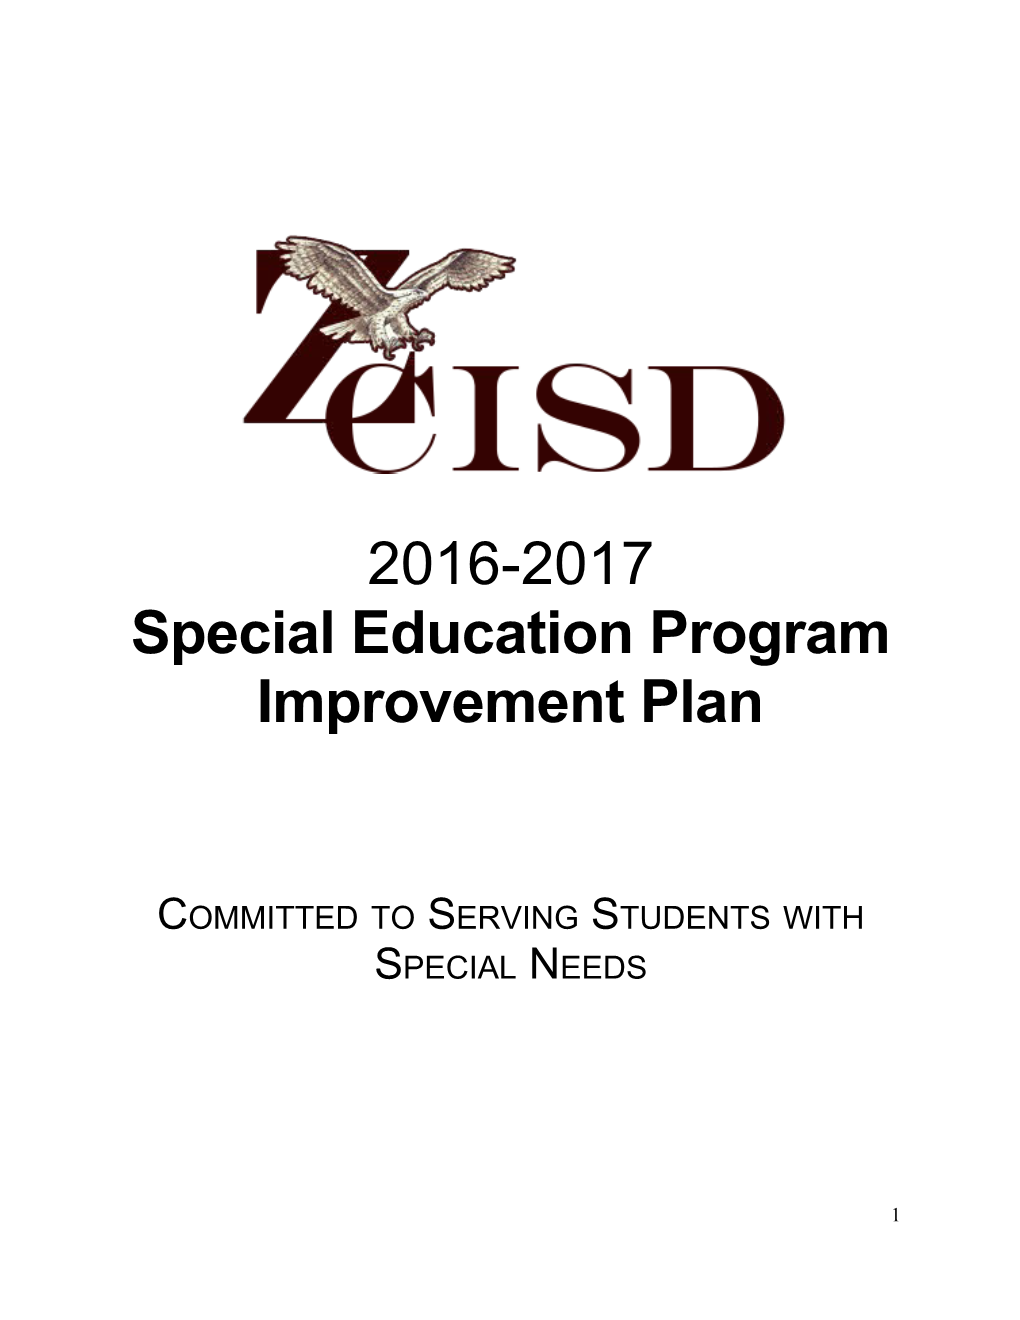 Special Education Program Improvement Plan